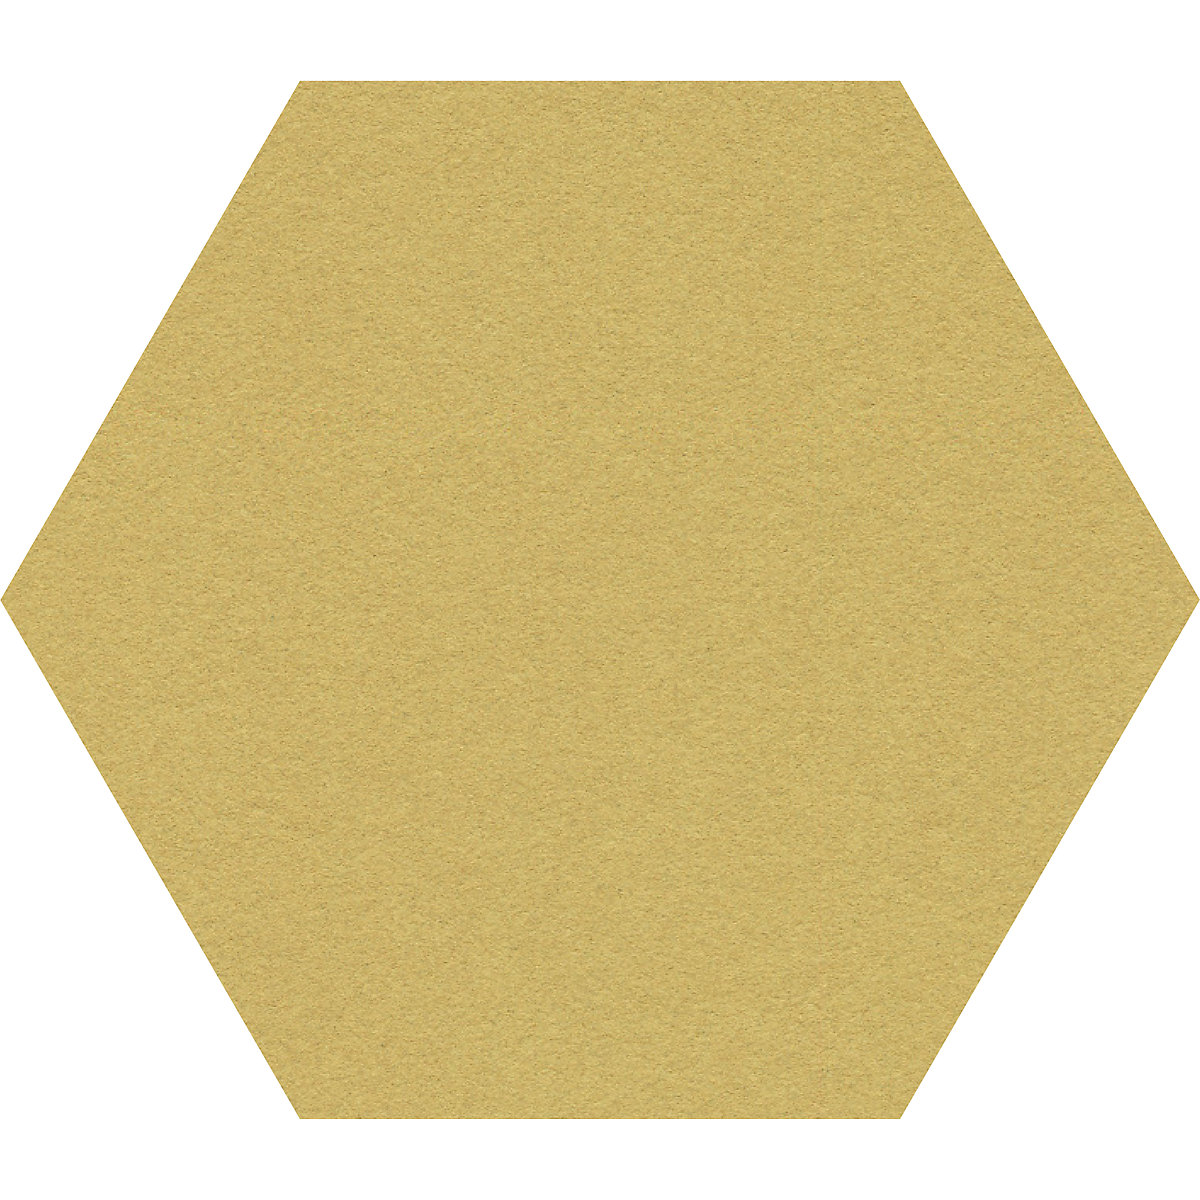 Design prikbord zeshoekig – Chameleon, kurk, b x h = 600 x 600 mm, geel-30